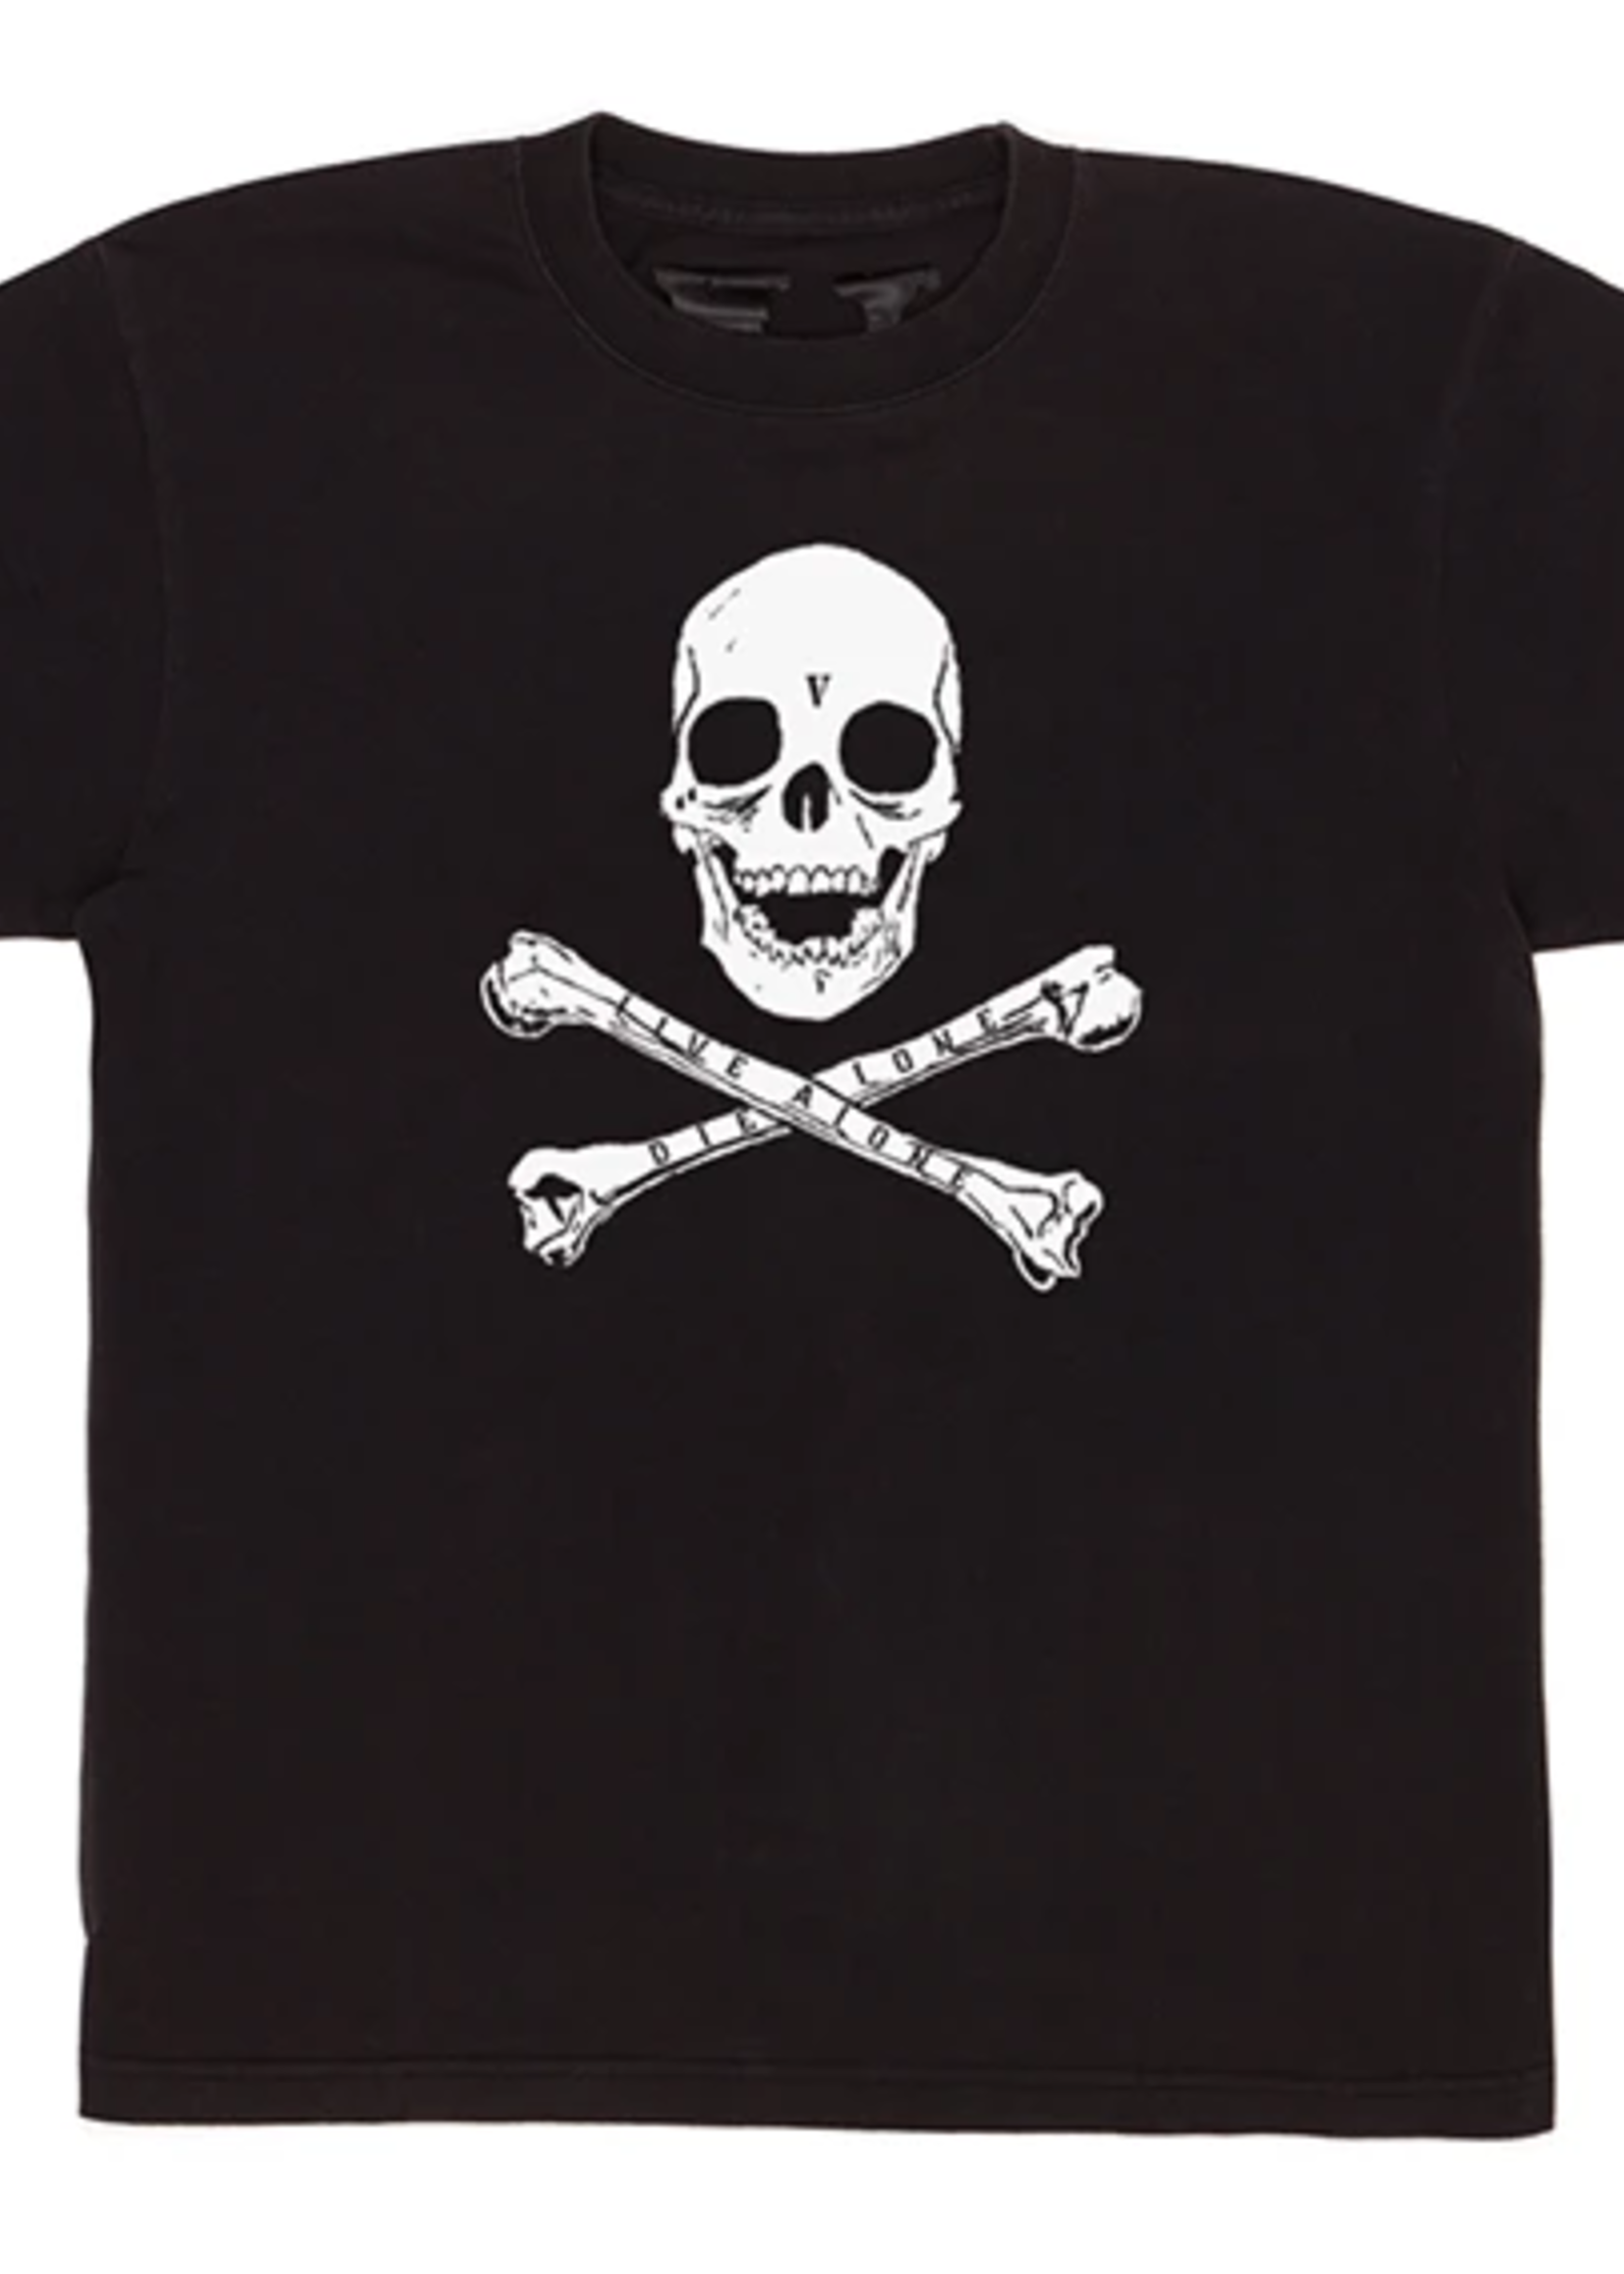 Buy vlone skeleton shirt - OFF 70%